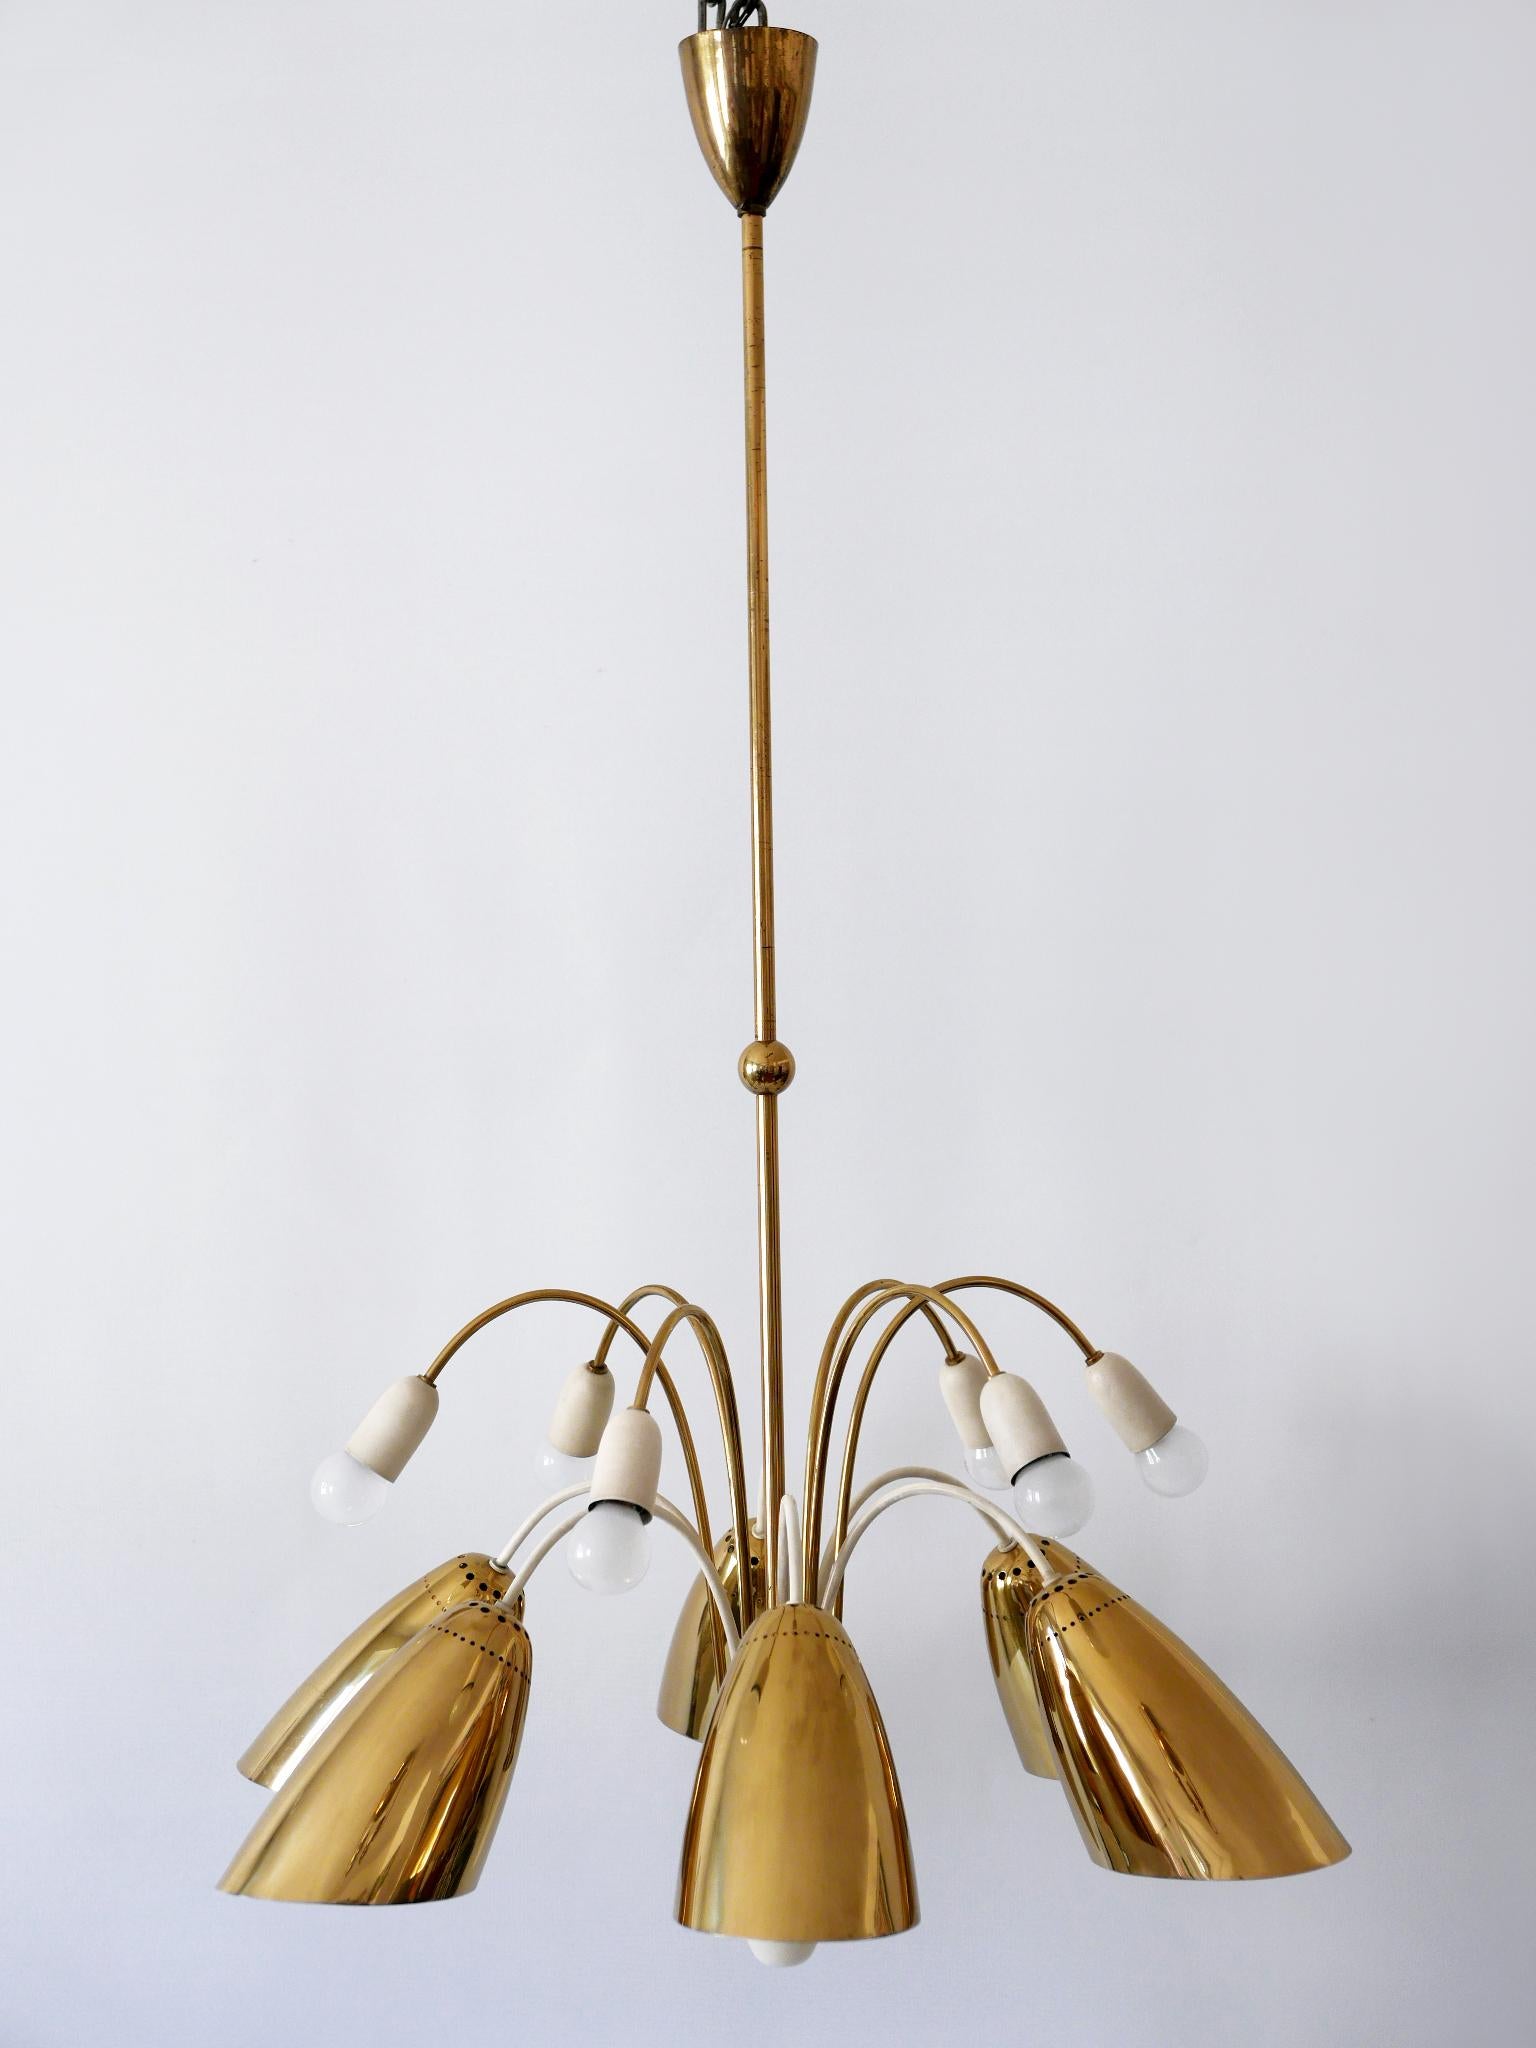 Brass Rare Large 12-Armed Sputnik Chandelier or Pendant Lamp by Vereinigte Werkstätten For Sale